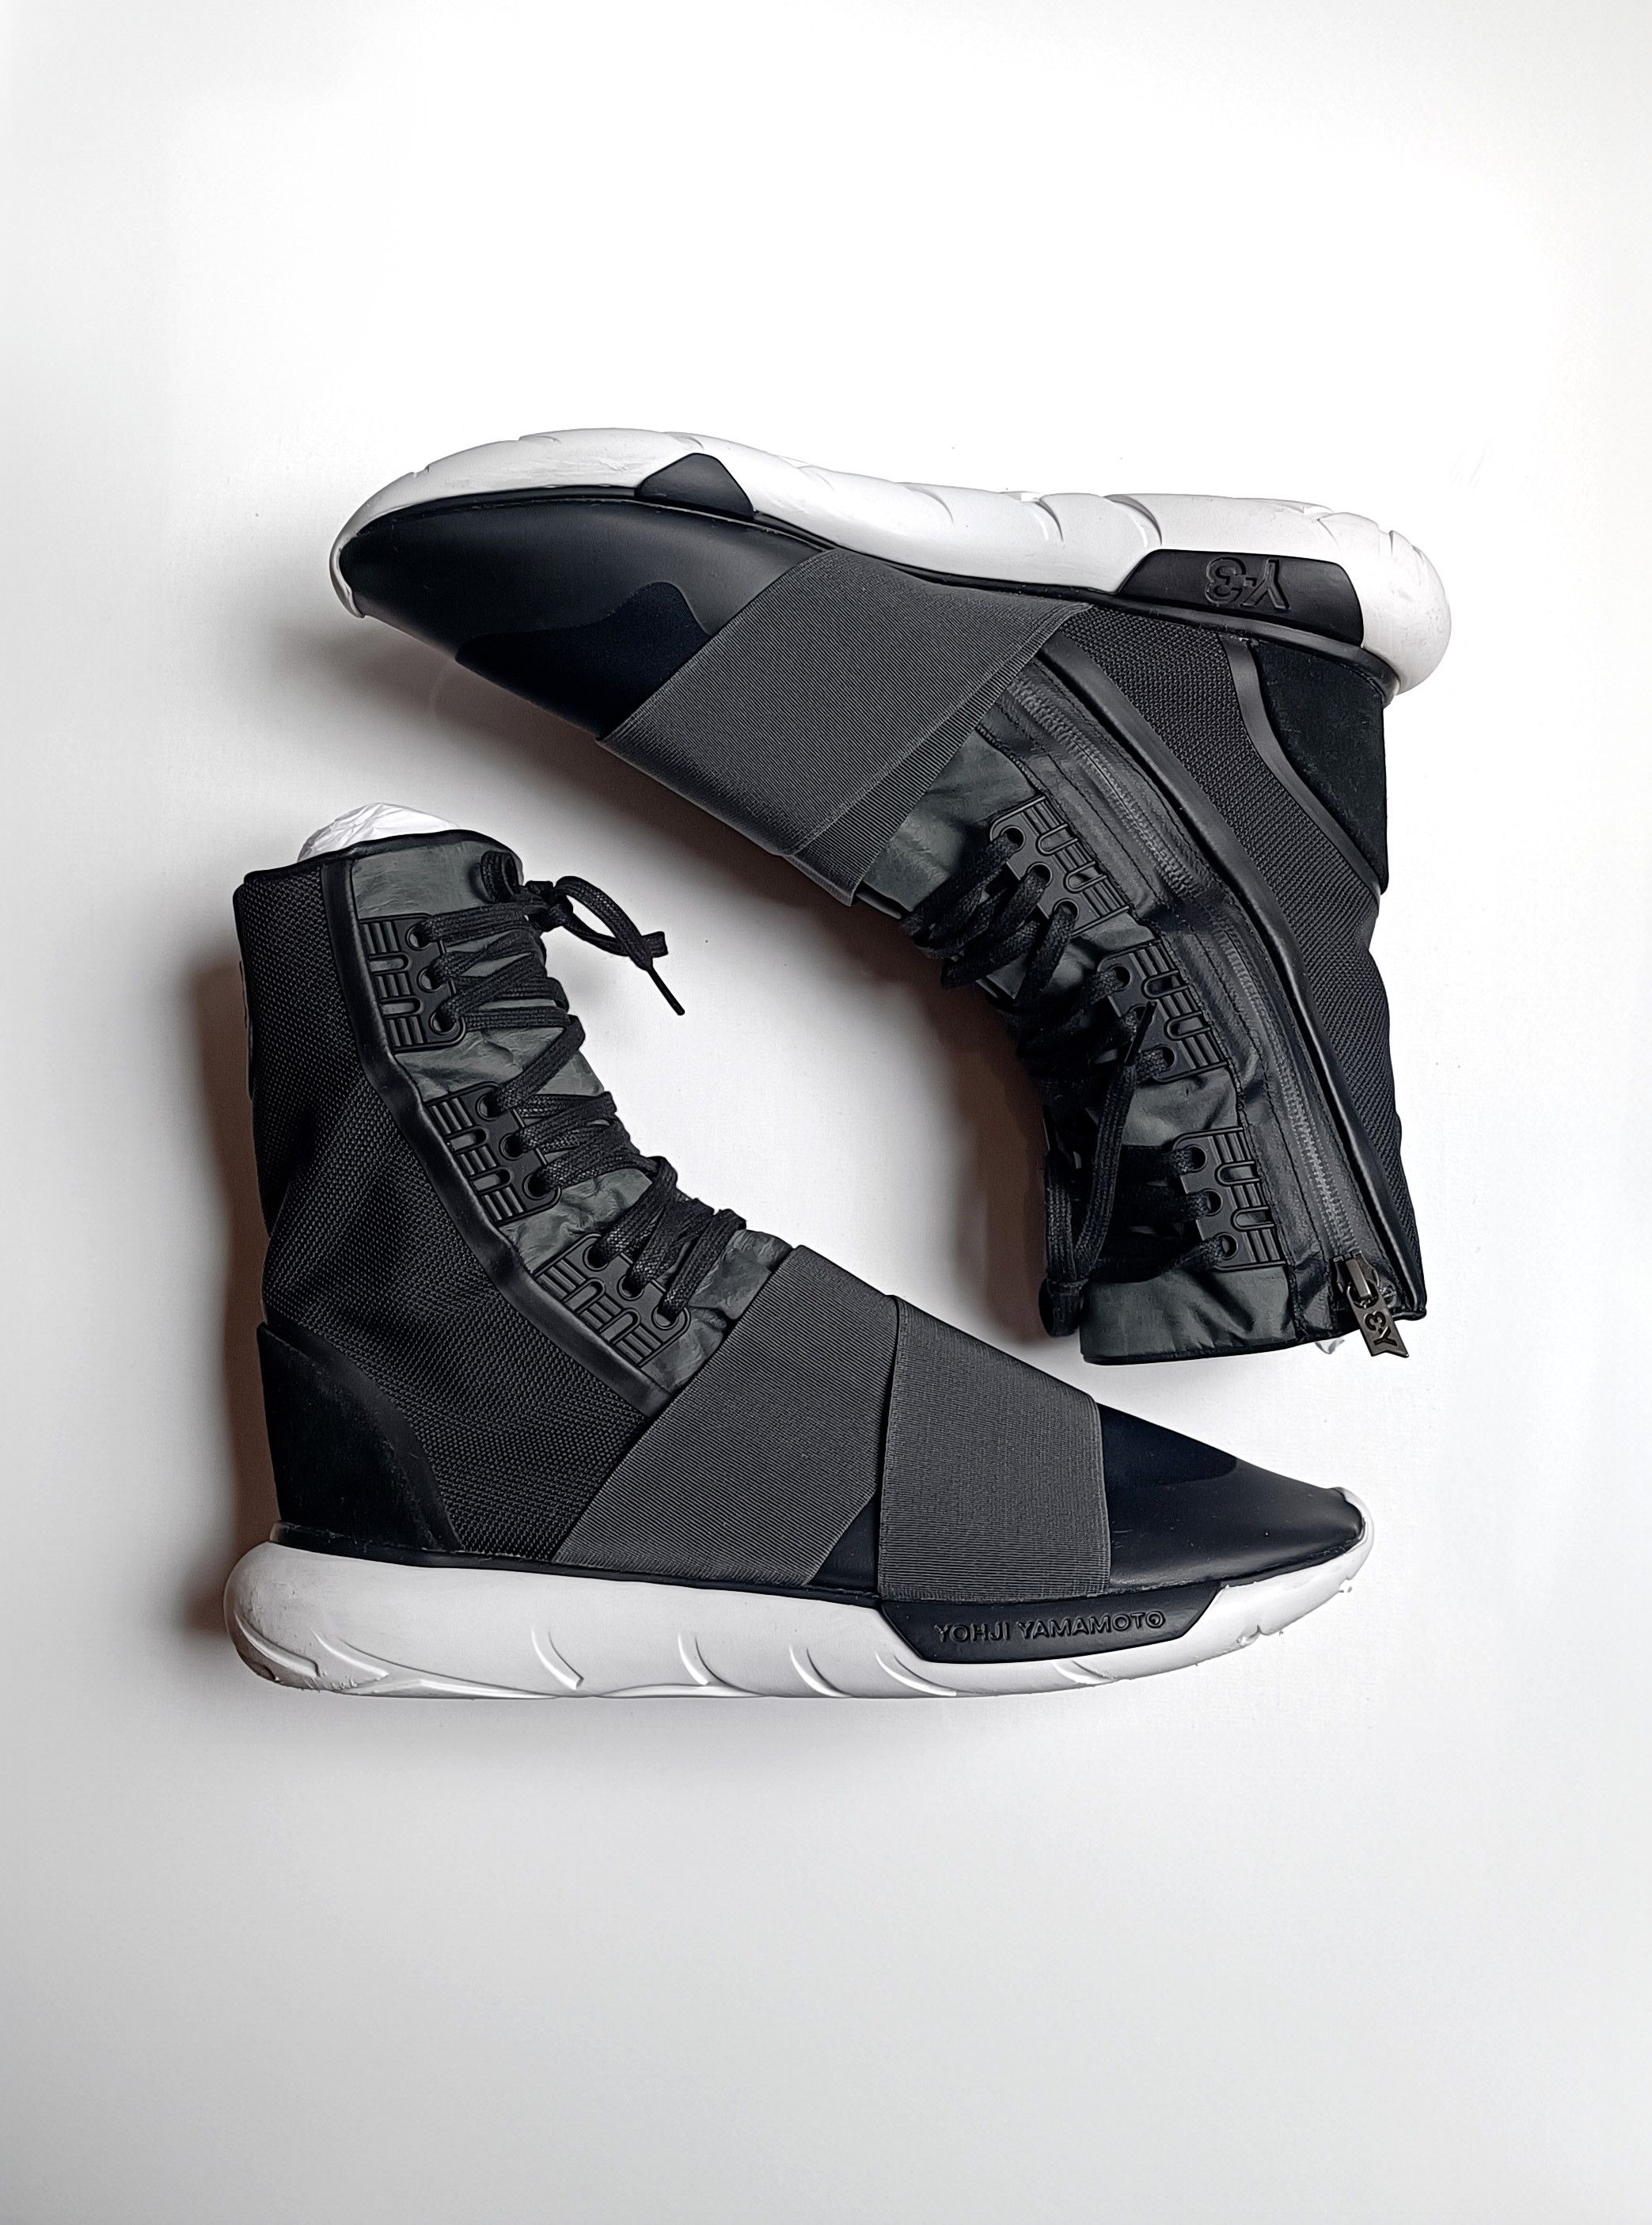 Adidas Y-3 Qasa Boot 'Charcoal Black' - 1